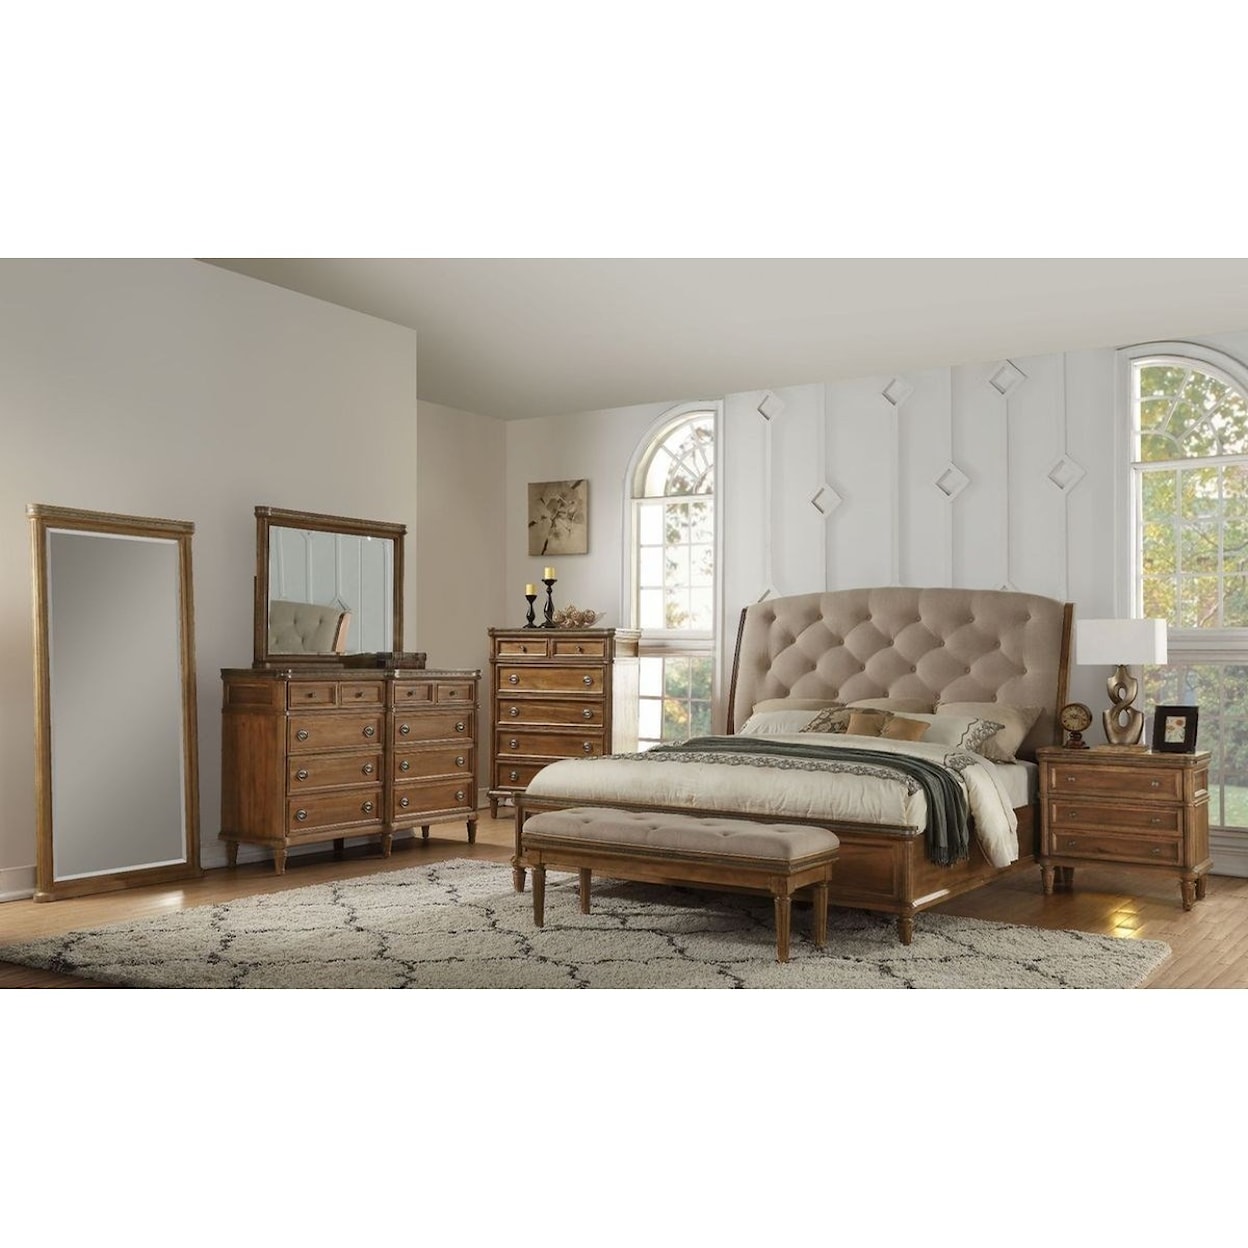 Avalon Furniture Ascot Dresser